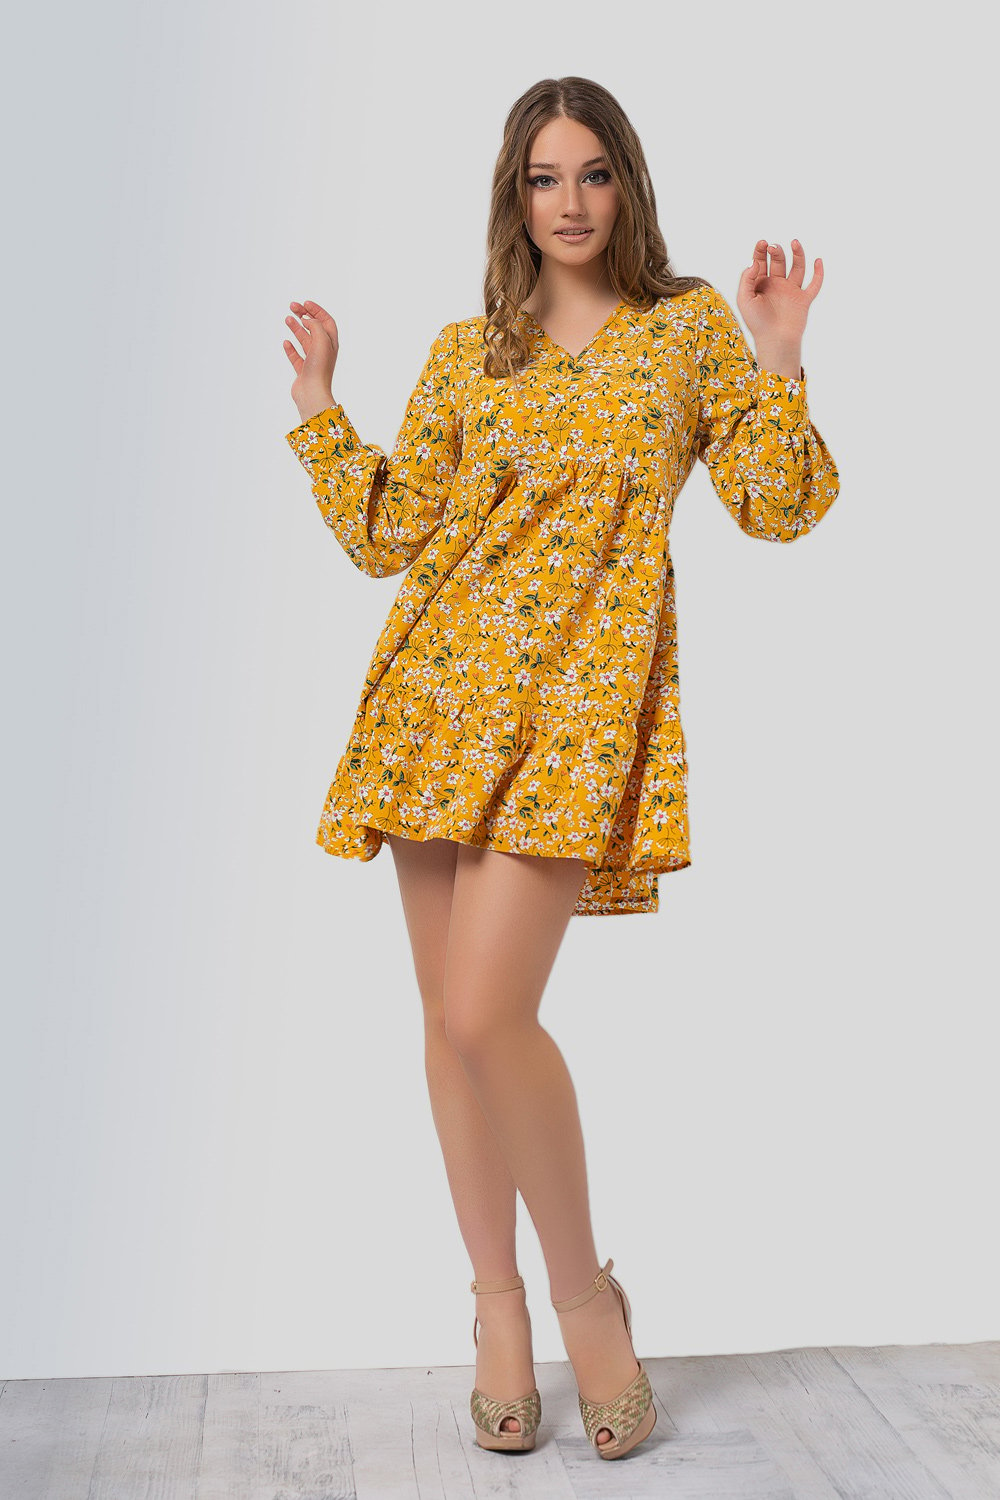 Yellow floral print dress